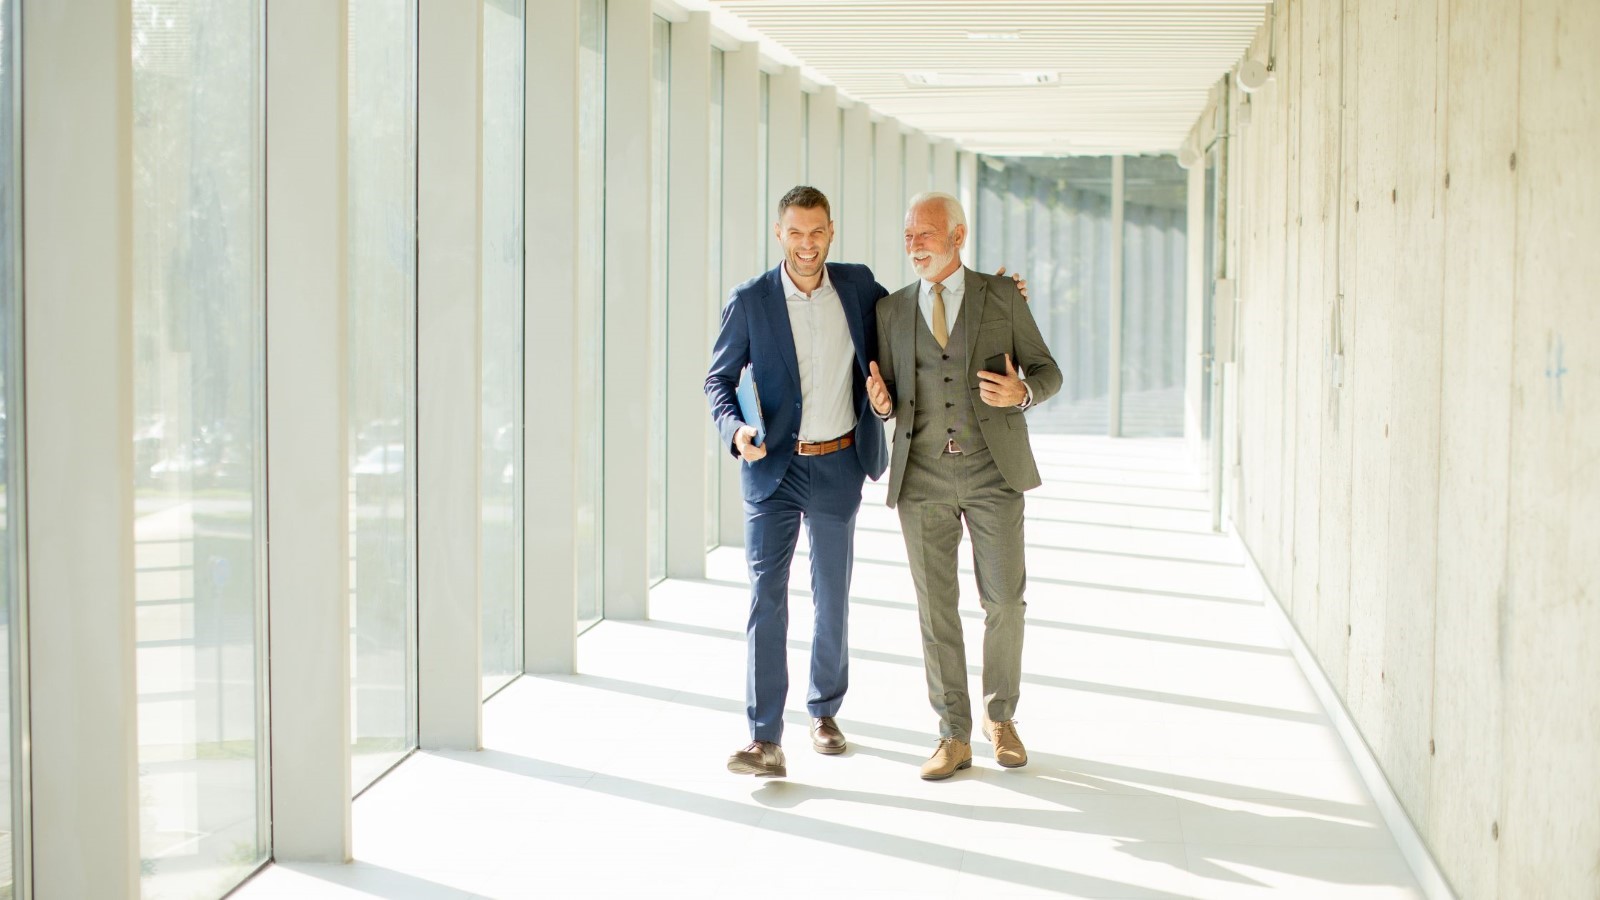 Men in suits walking down a hallway